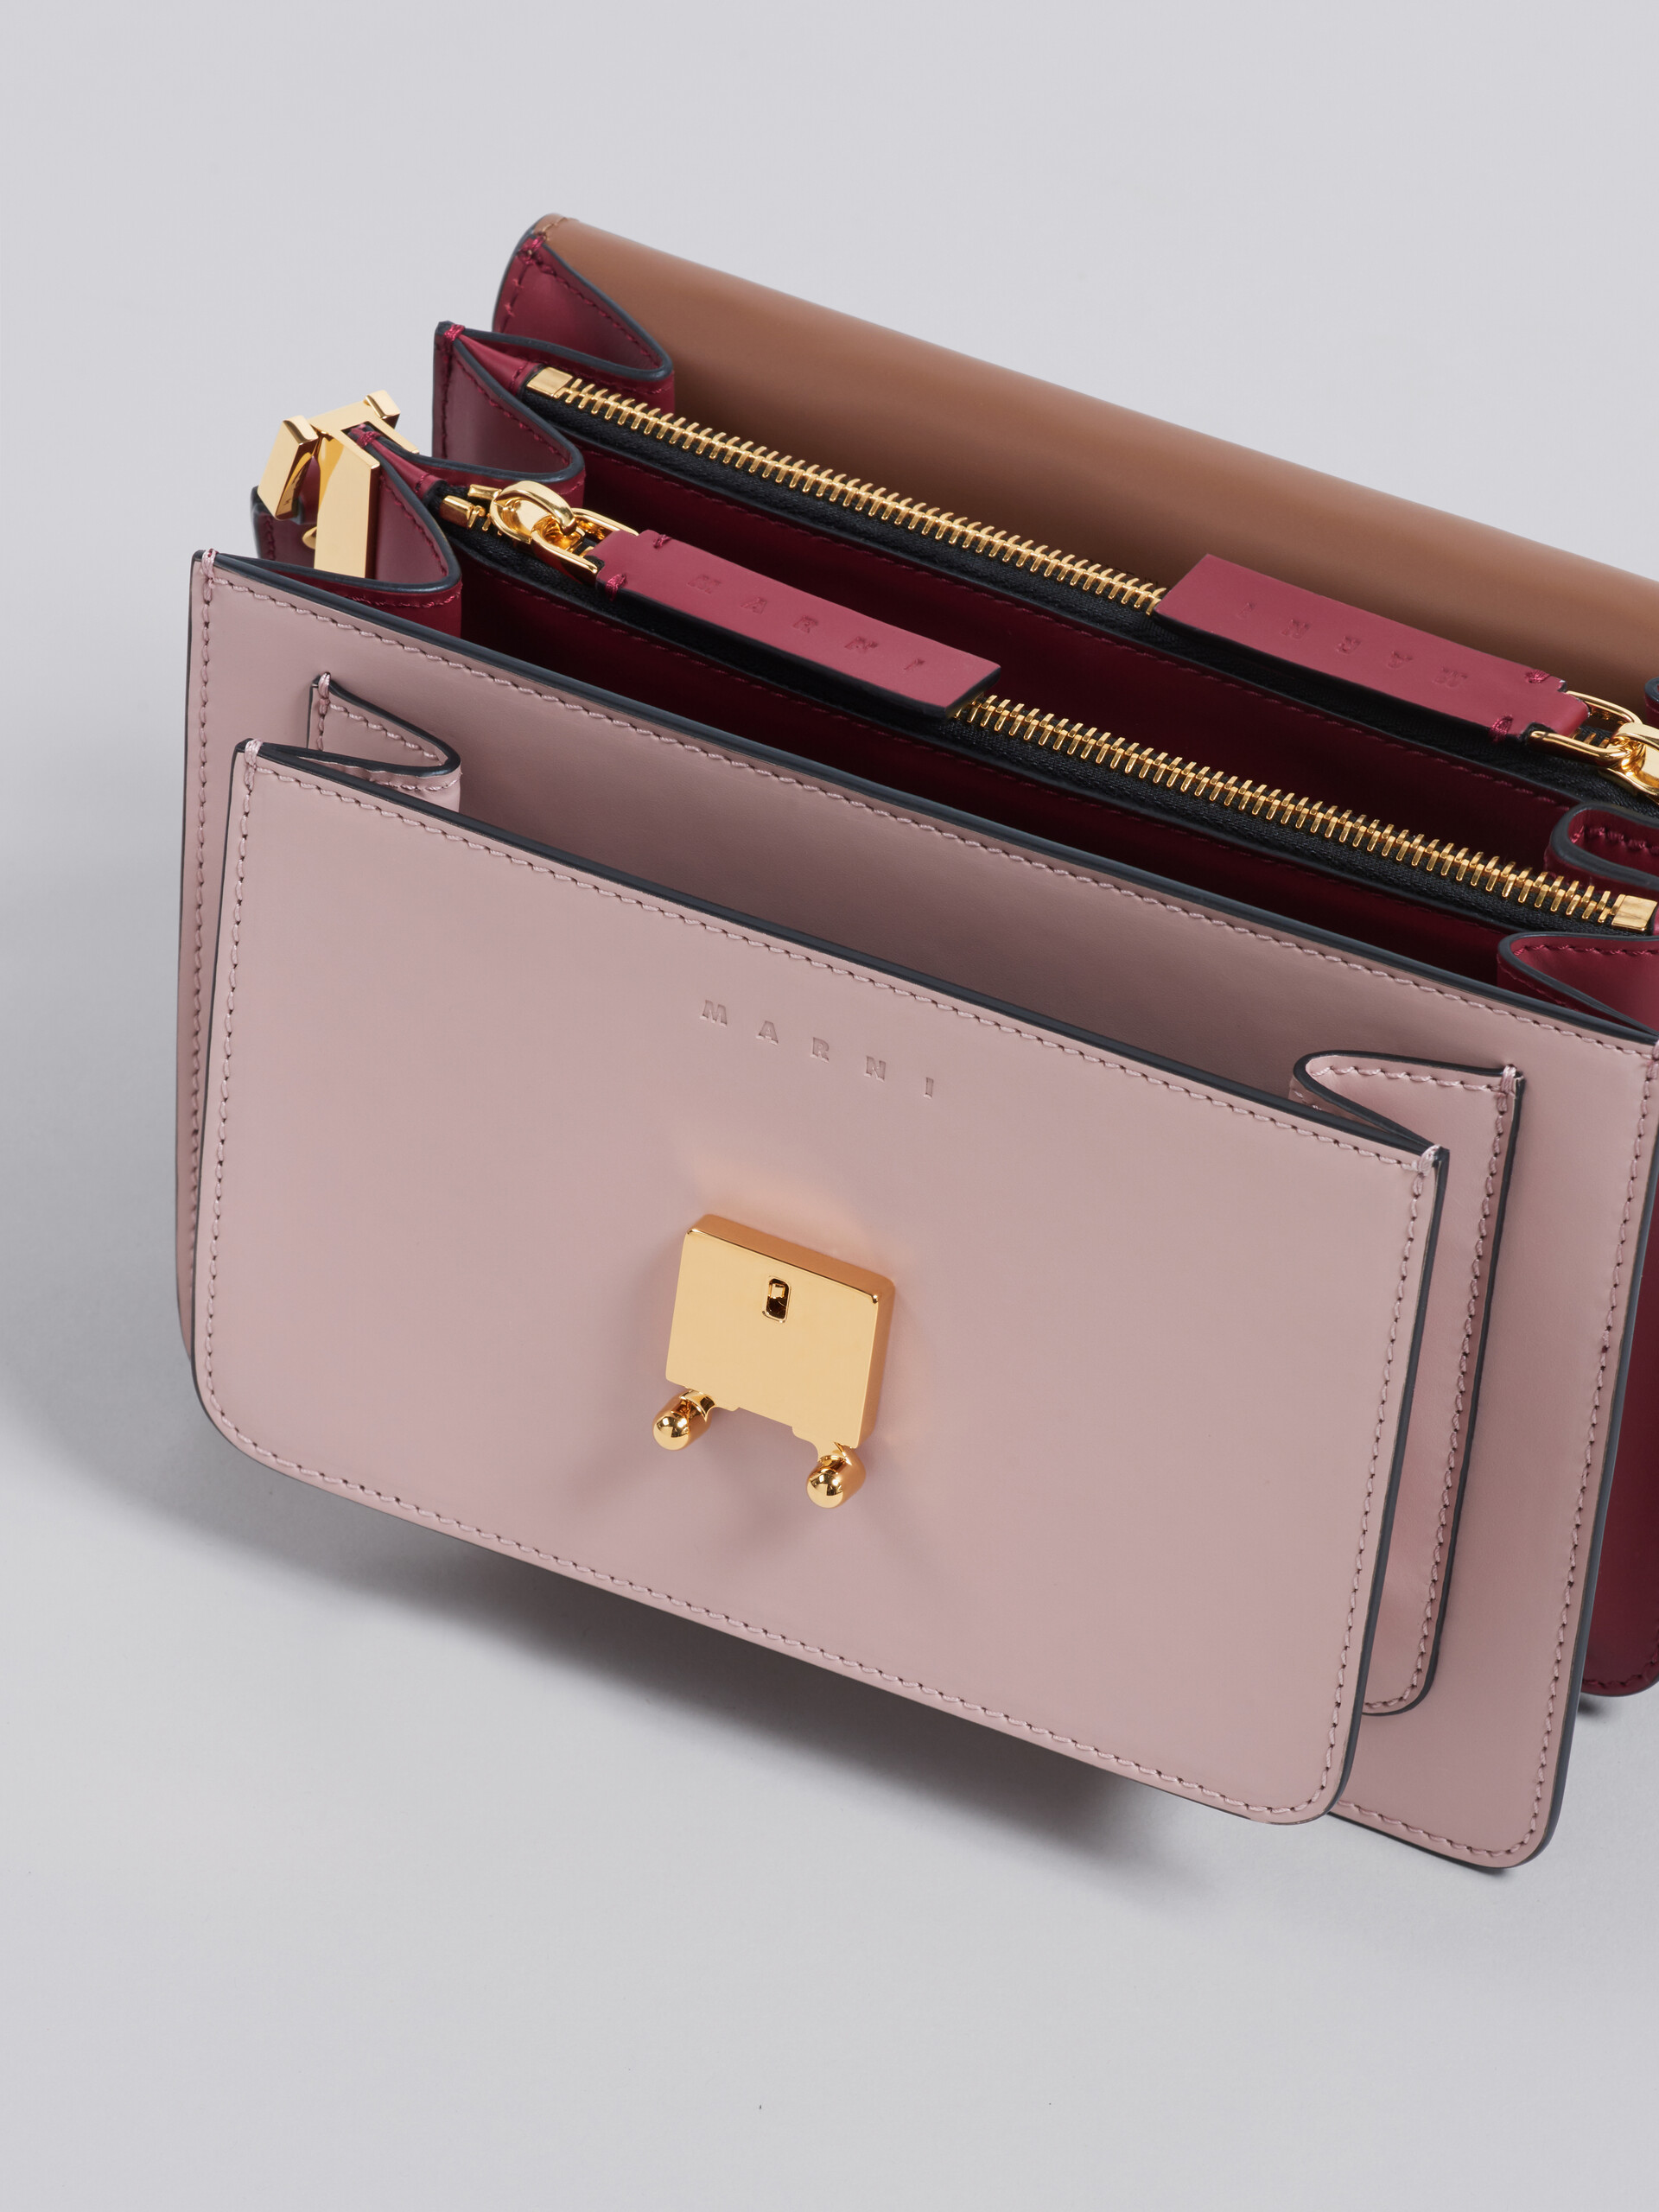 TRUNK medium bag in brown pink and red leather - Shoulder Bag - Image 3